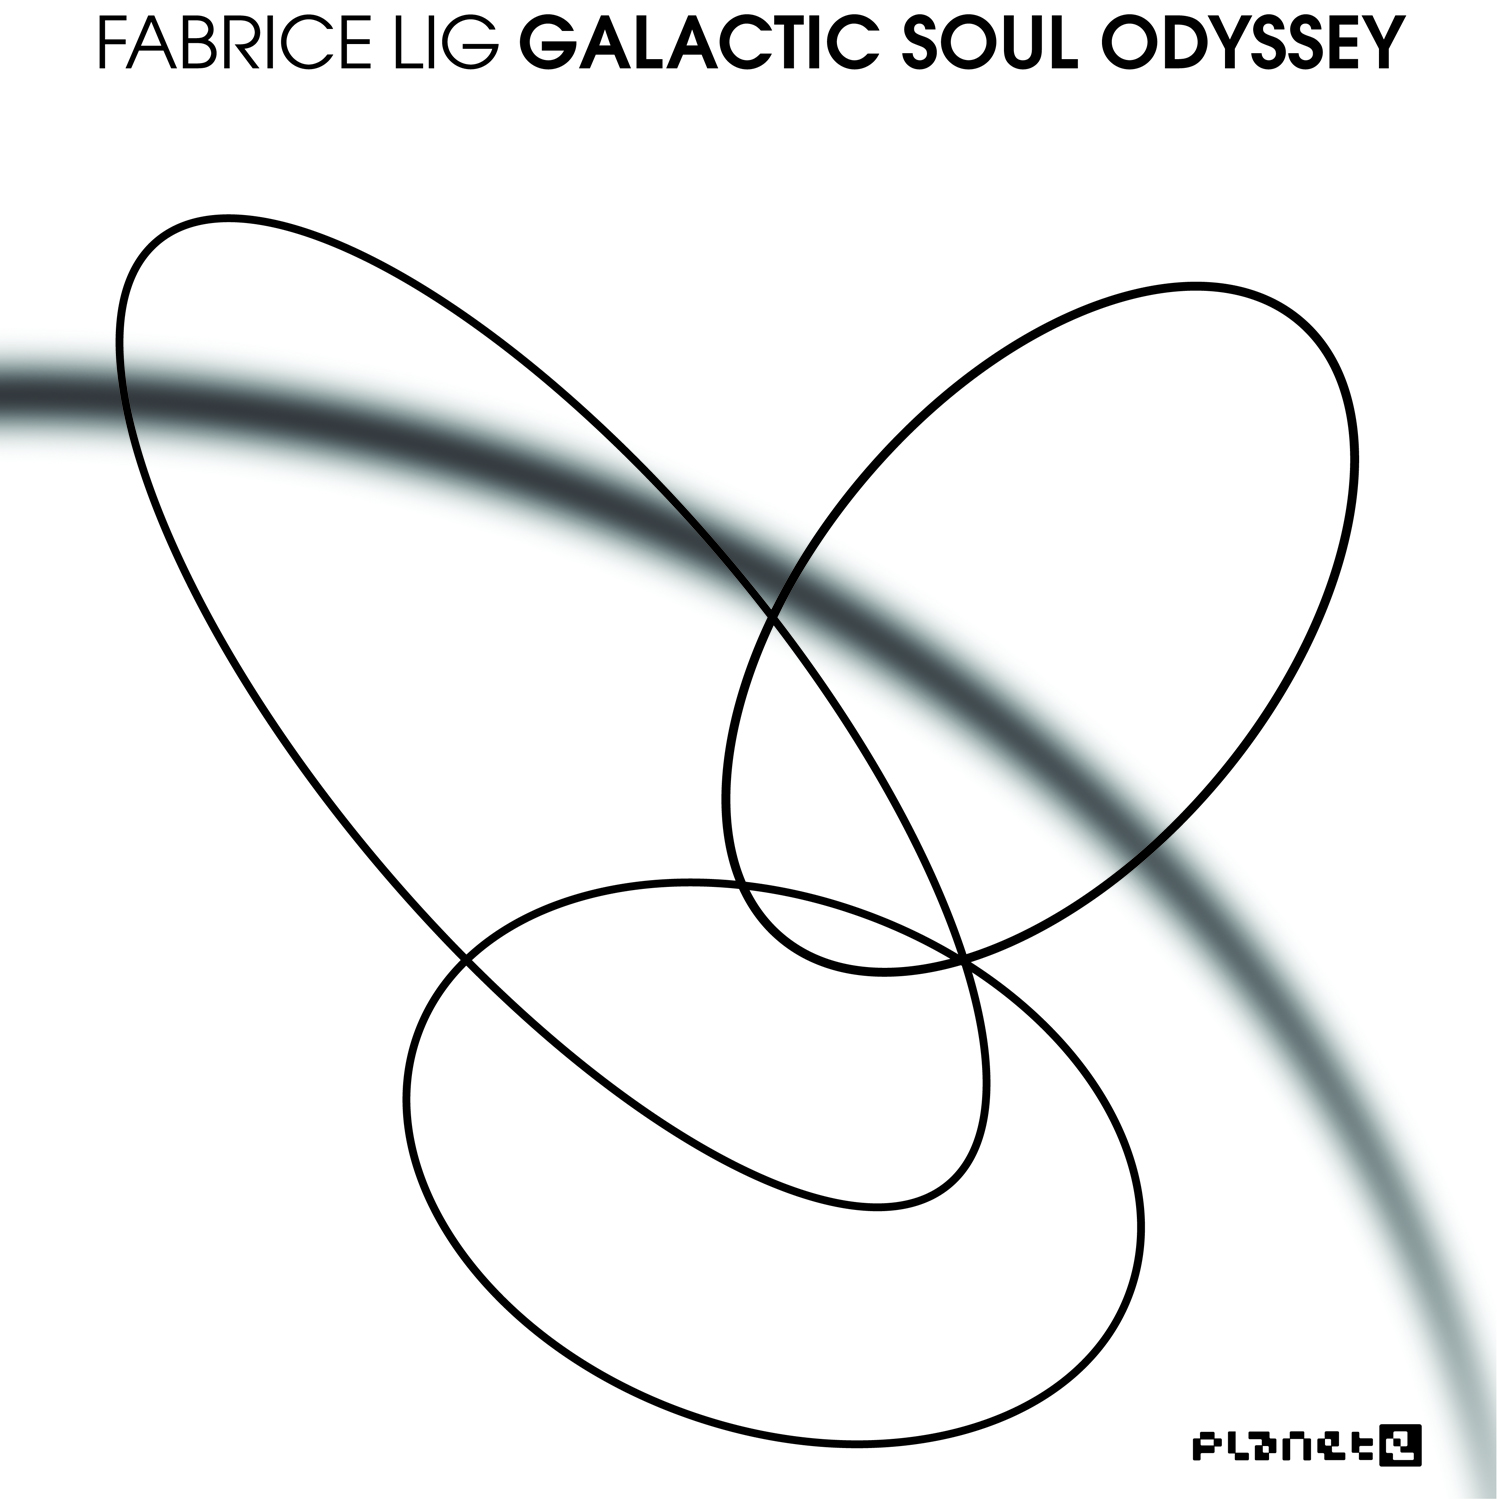 Fabrice Lig/GALACTIC SOUL ODYSSEY CD